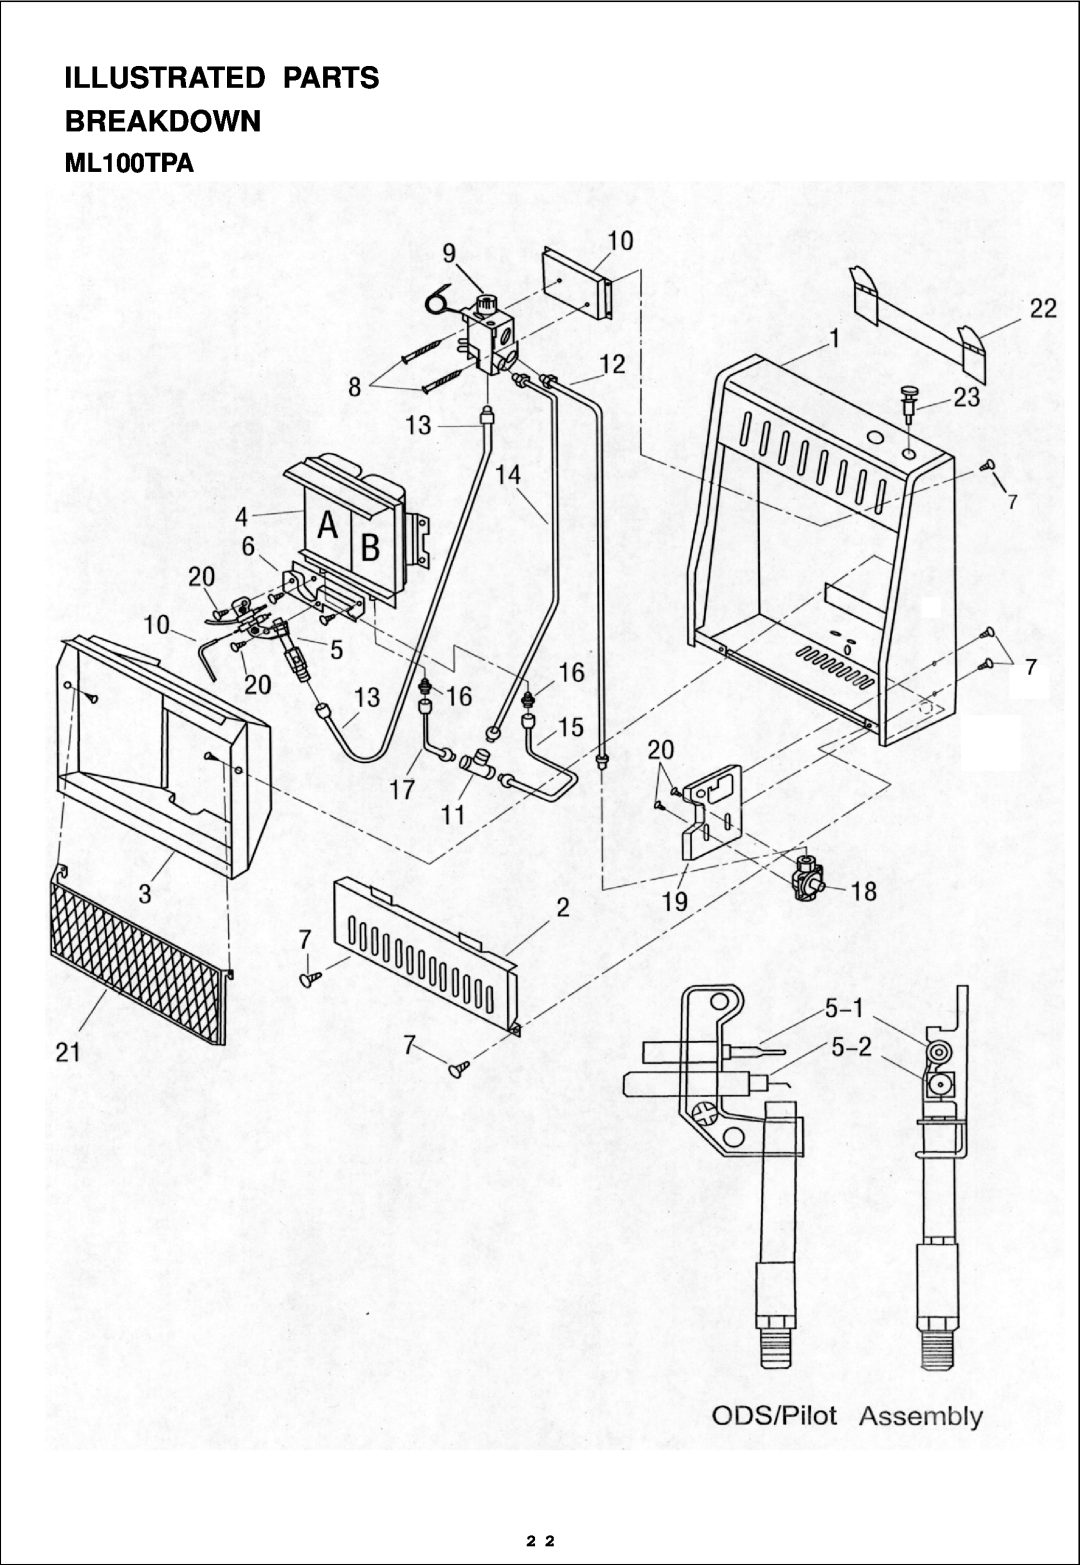 Procom ML100HPA, ML060HPA installation manual ML100TPA, Illustrated Parts Breakdown 